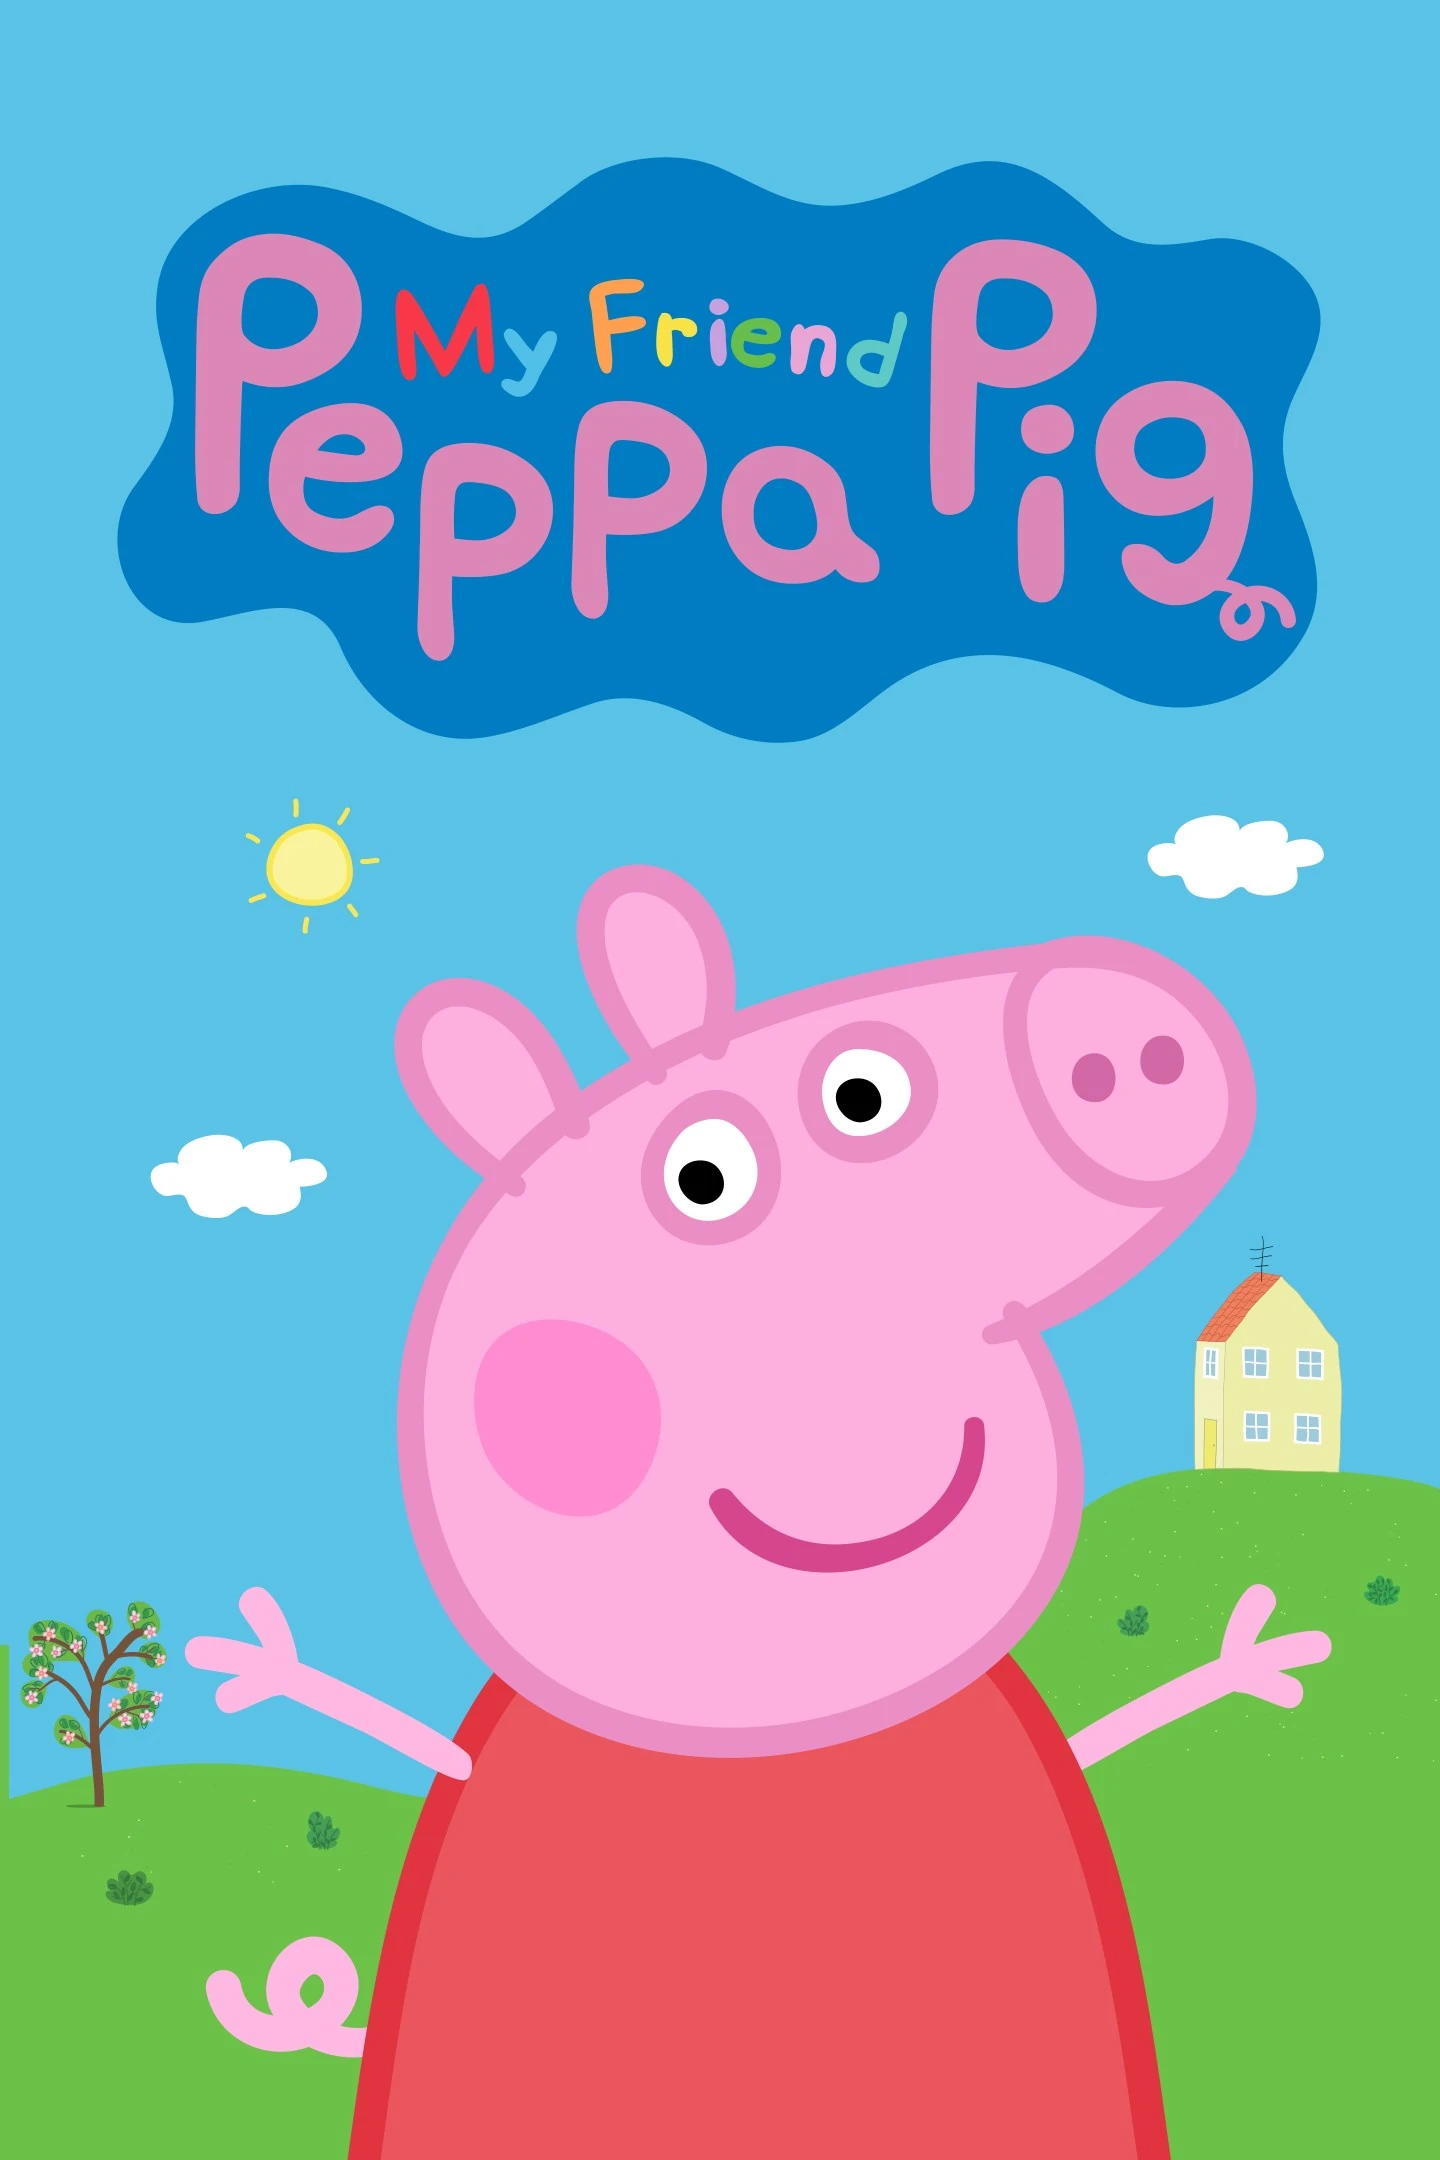 My Friend Peppa Pig (PC) - Steam - Digital Code